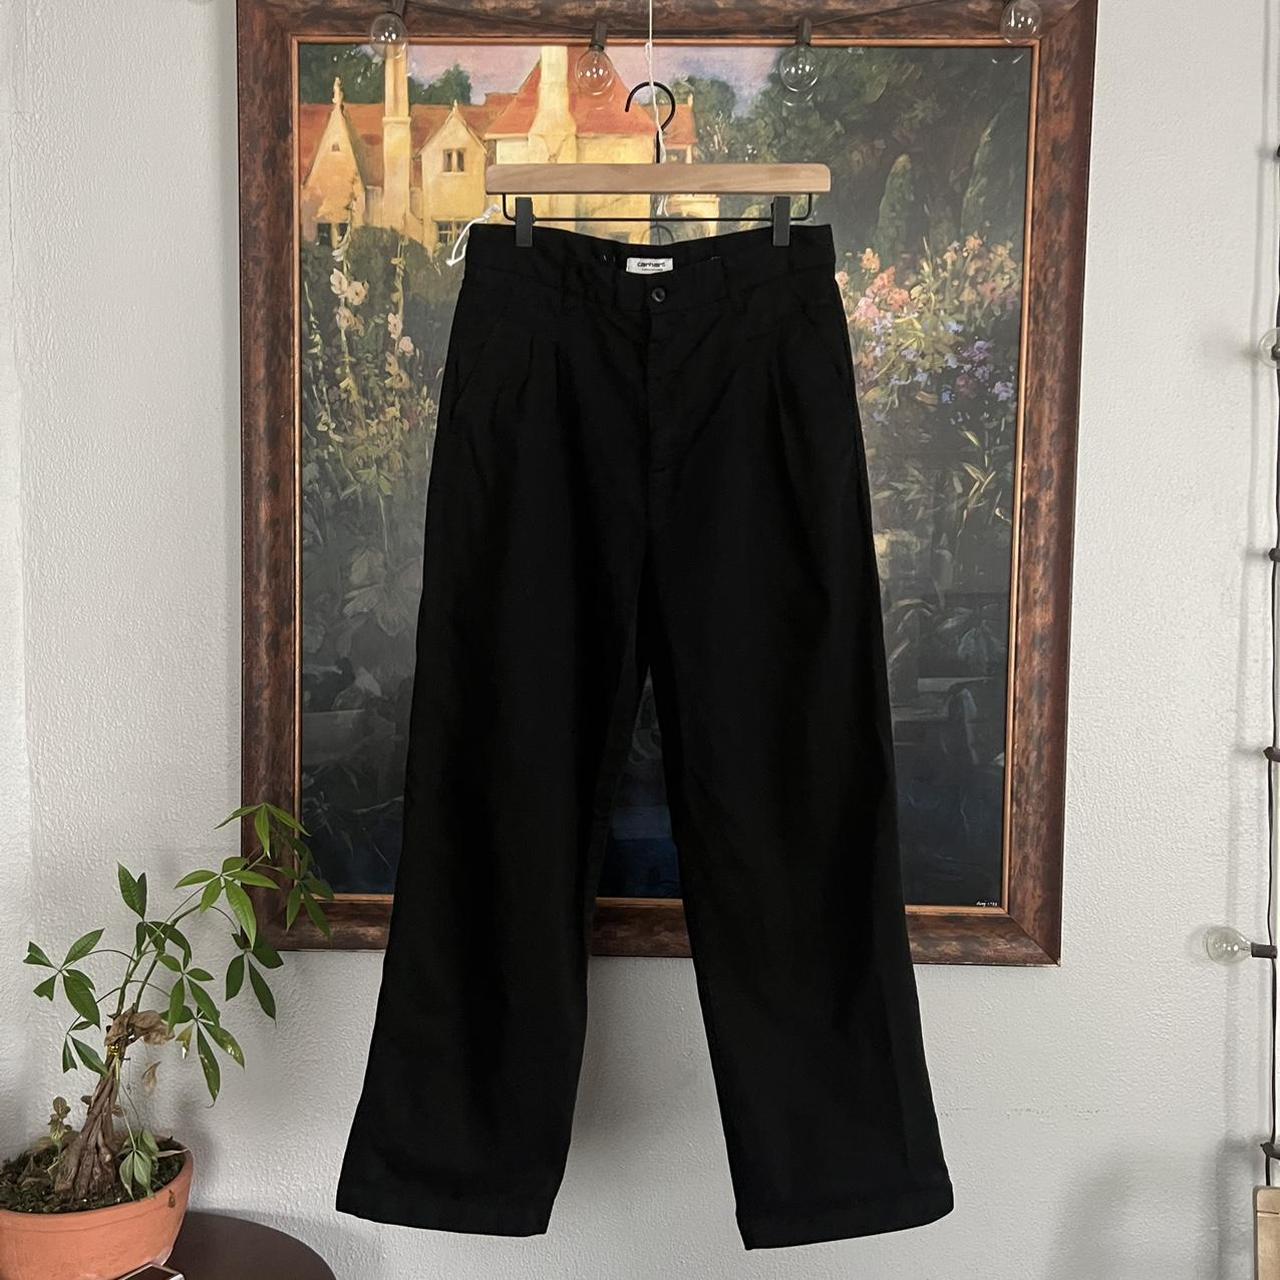 Carhartt WIP Men's Black Trousers